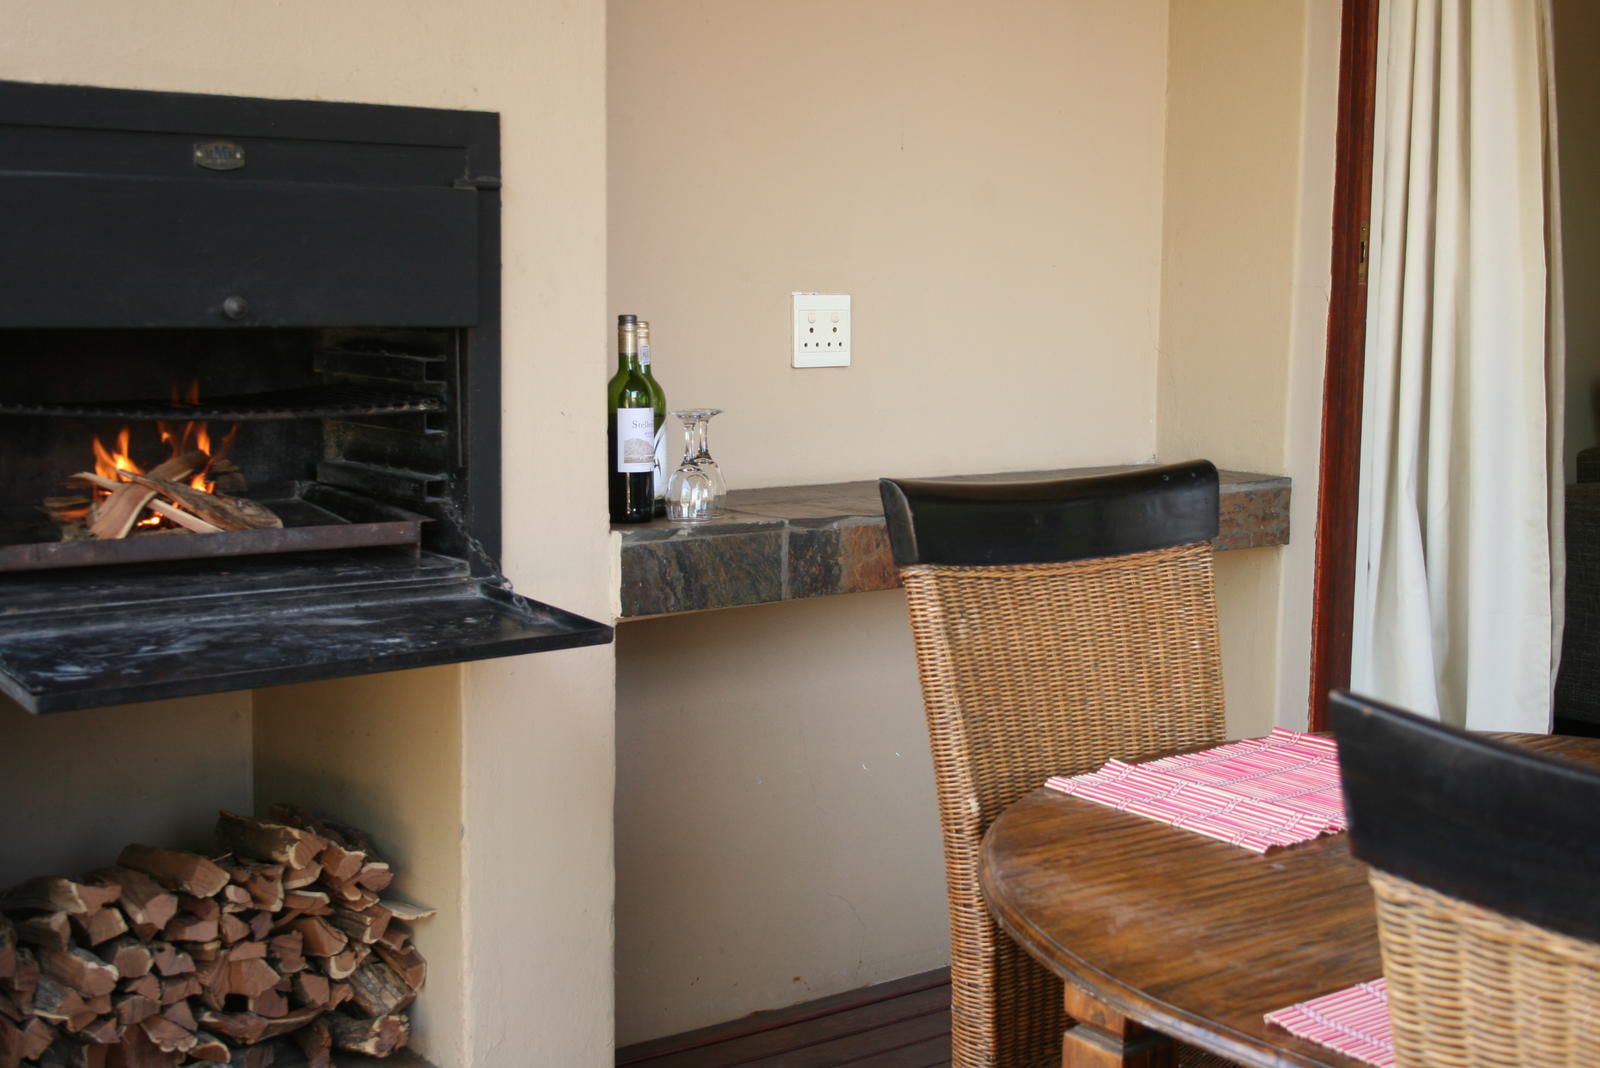 Shakala Village Modimolle Nylstroom Limpopo Province South Africa Fireplace, Living Room